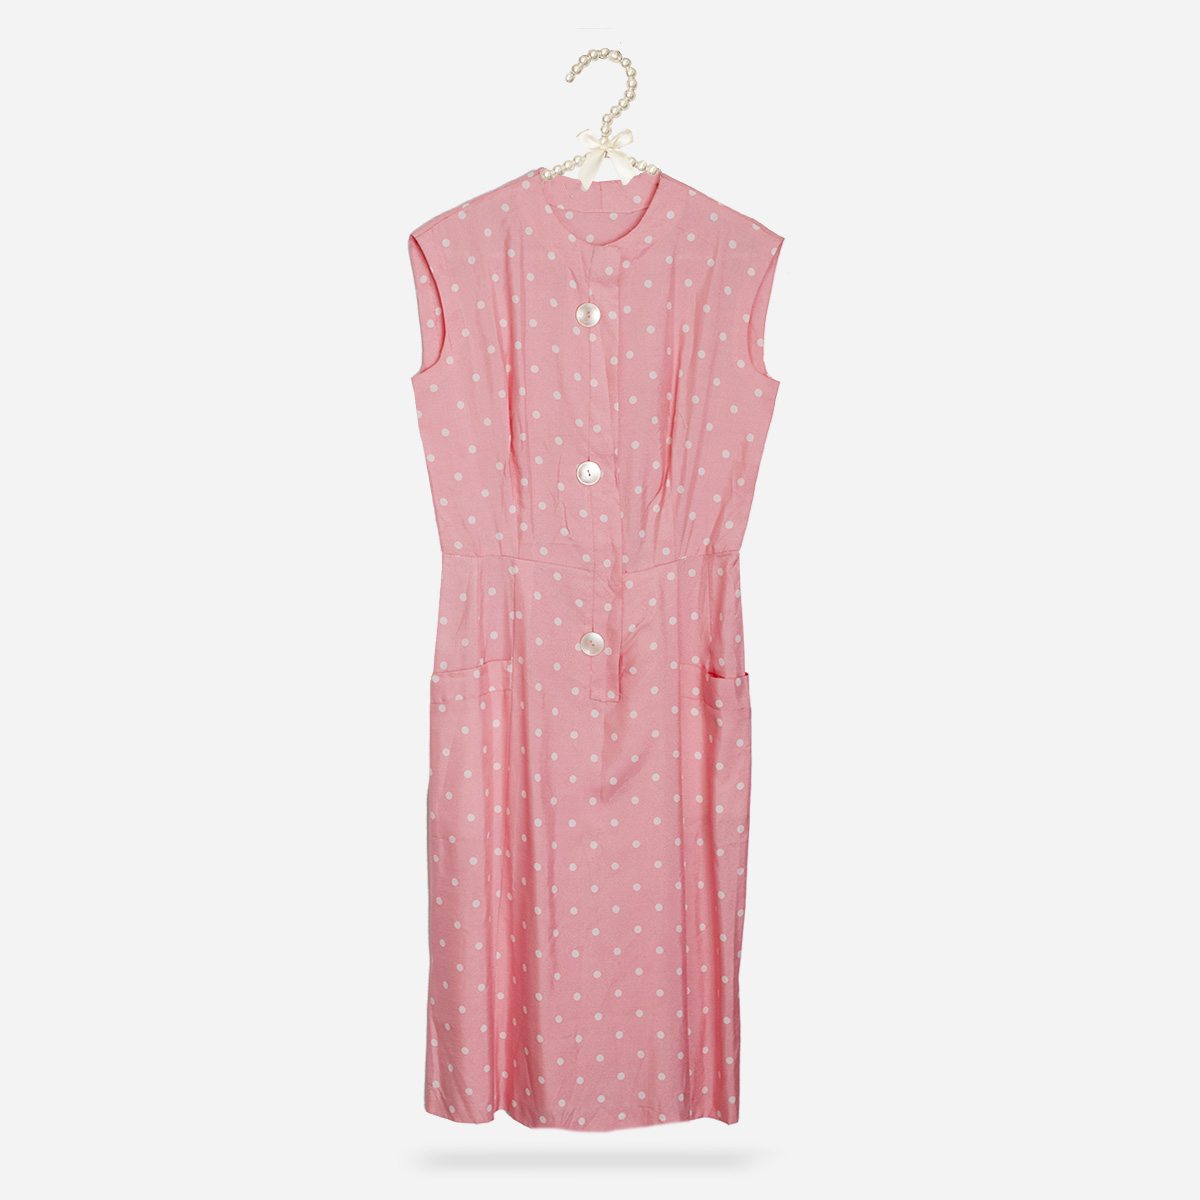 1950s pink polka dot dress